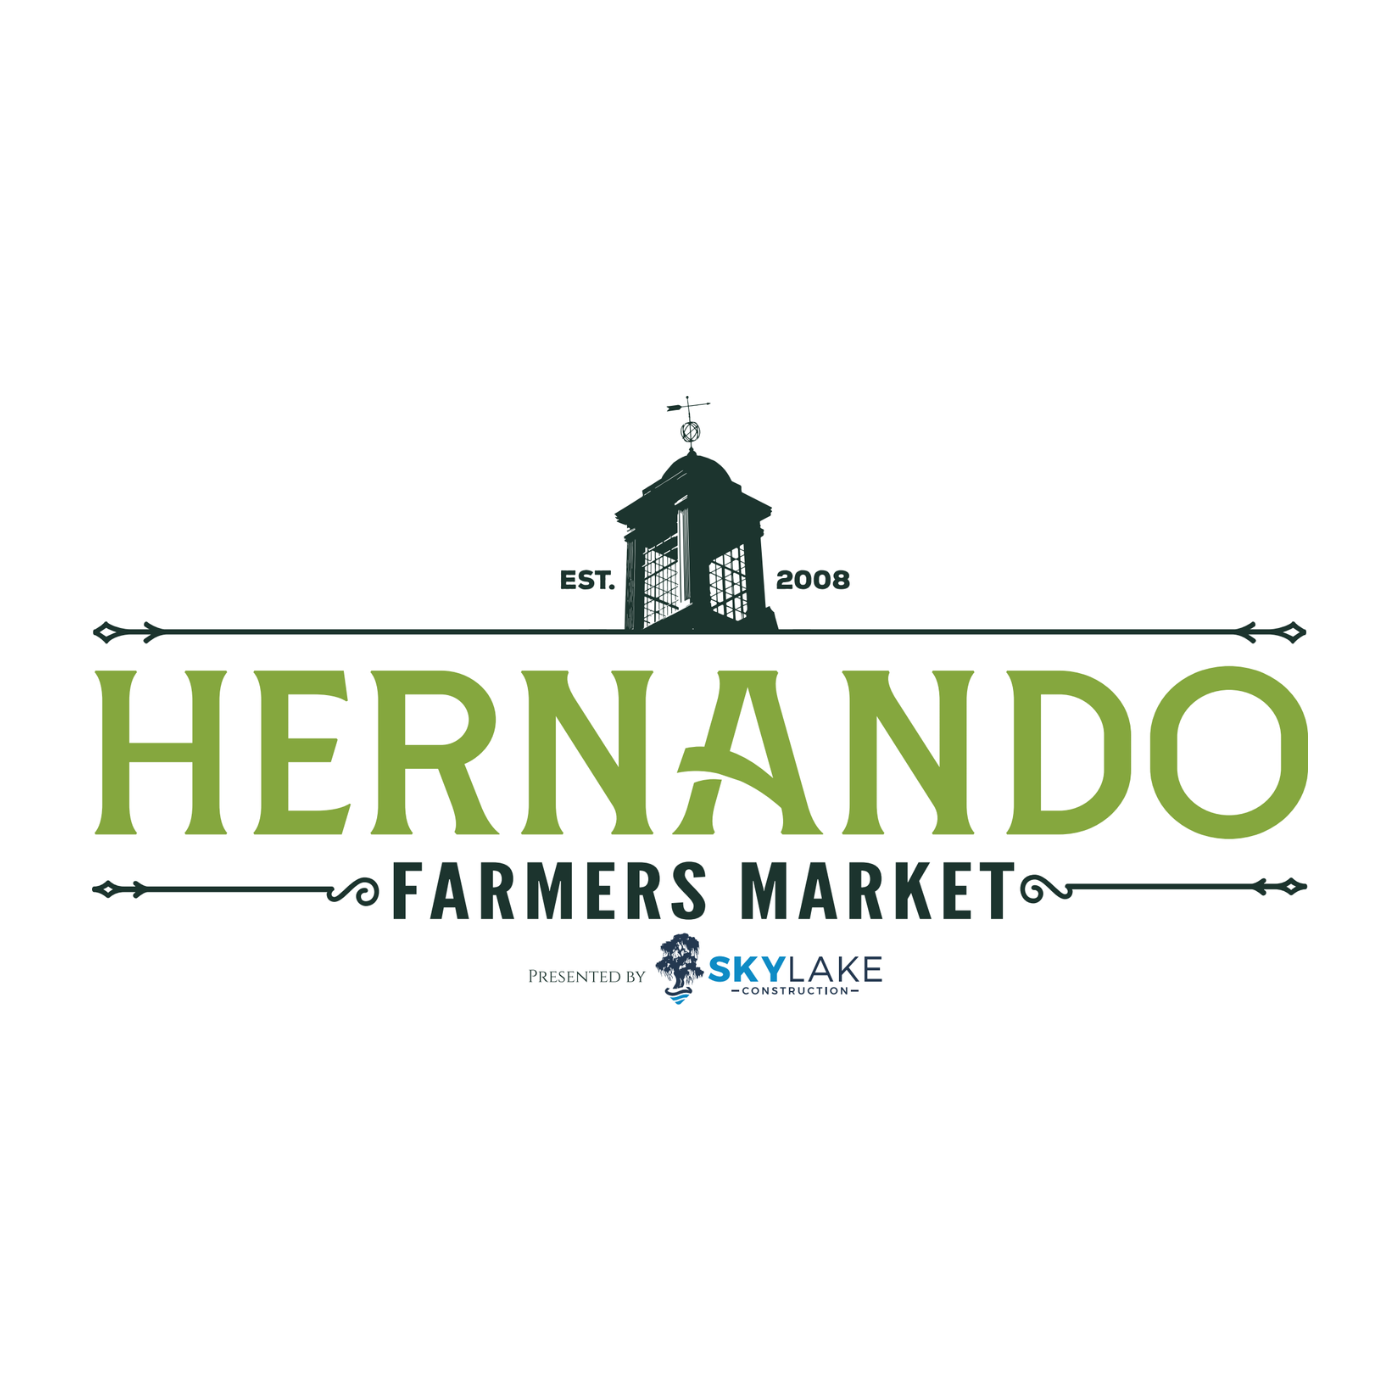 Hernando Farmers Market